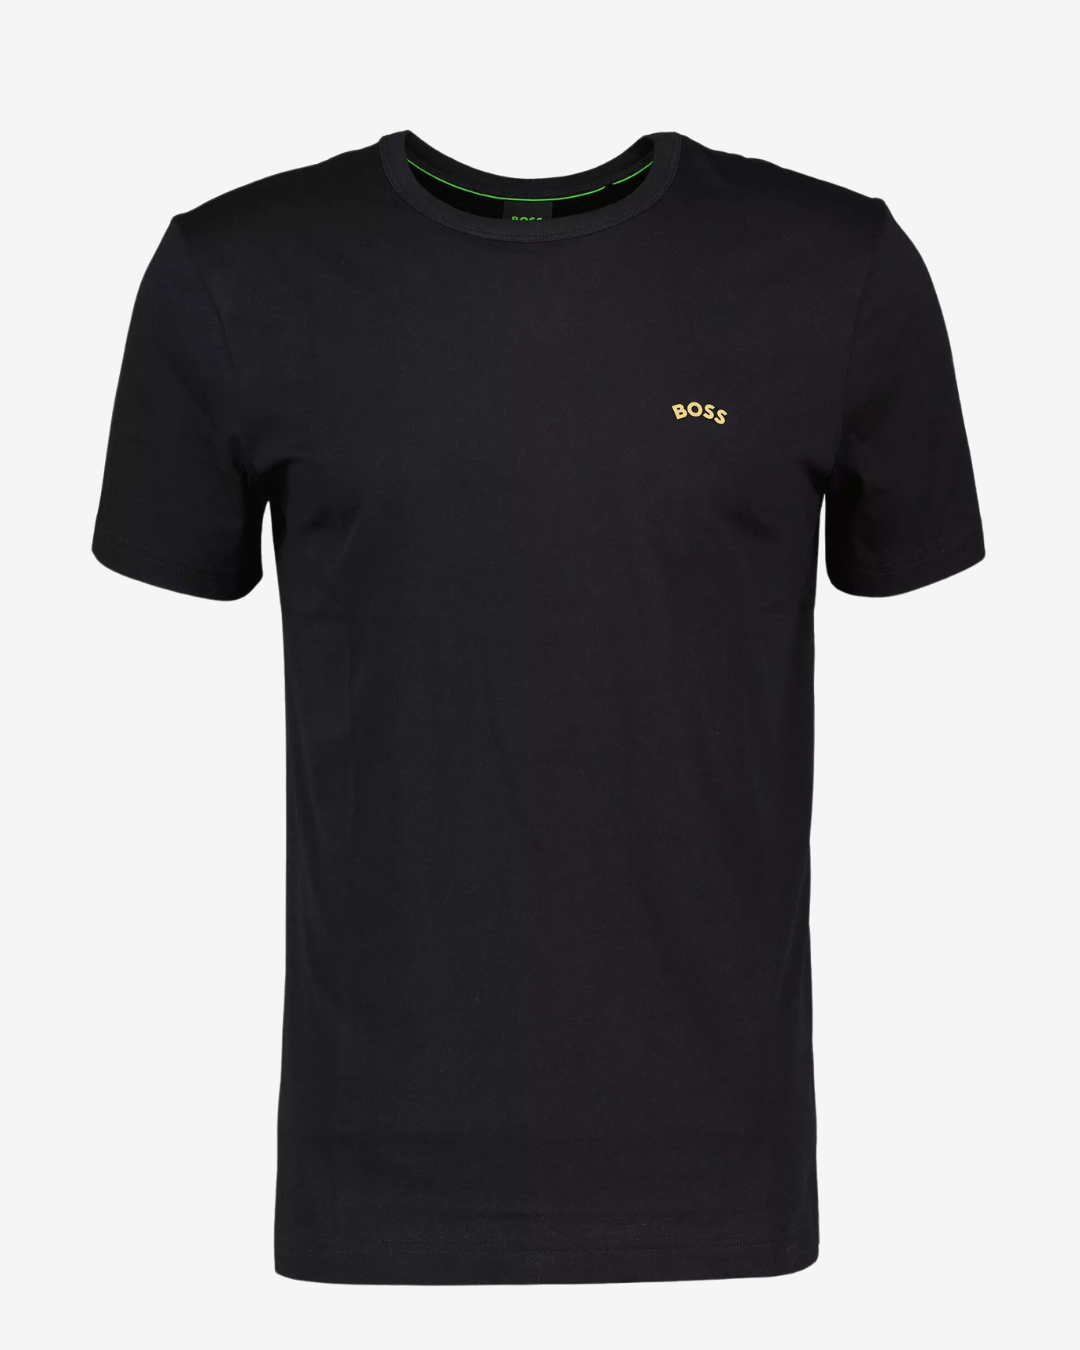 Se Hugo Boss Curved logo t-shirt - Sort / Guld - Str. XXL - Modish.dk hos Modish.dk